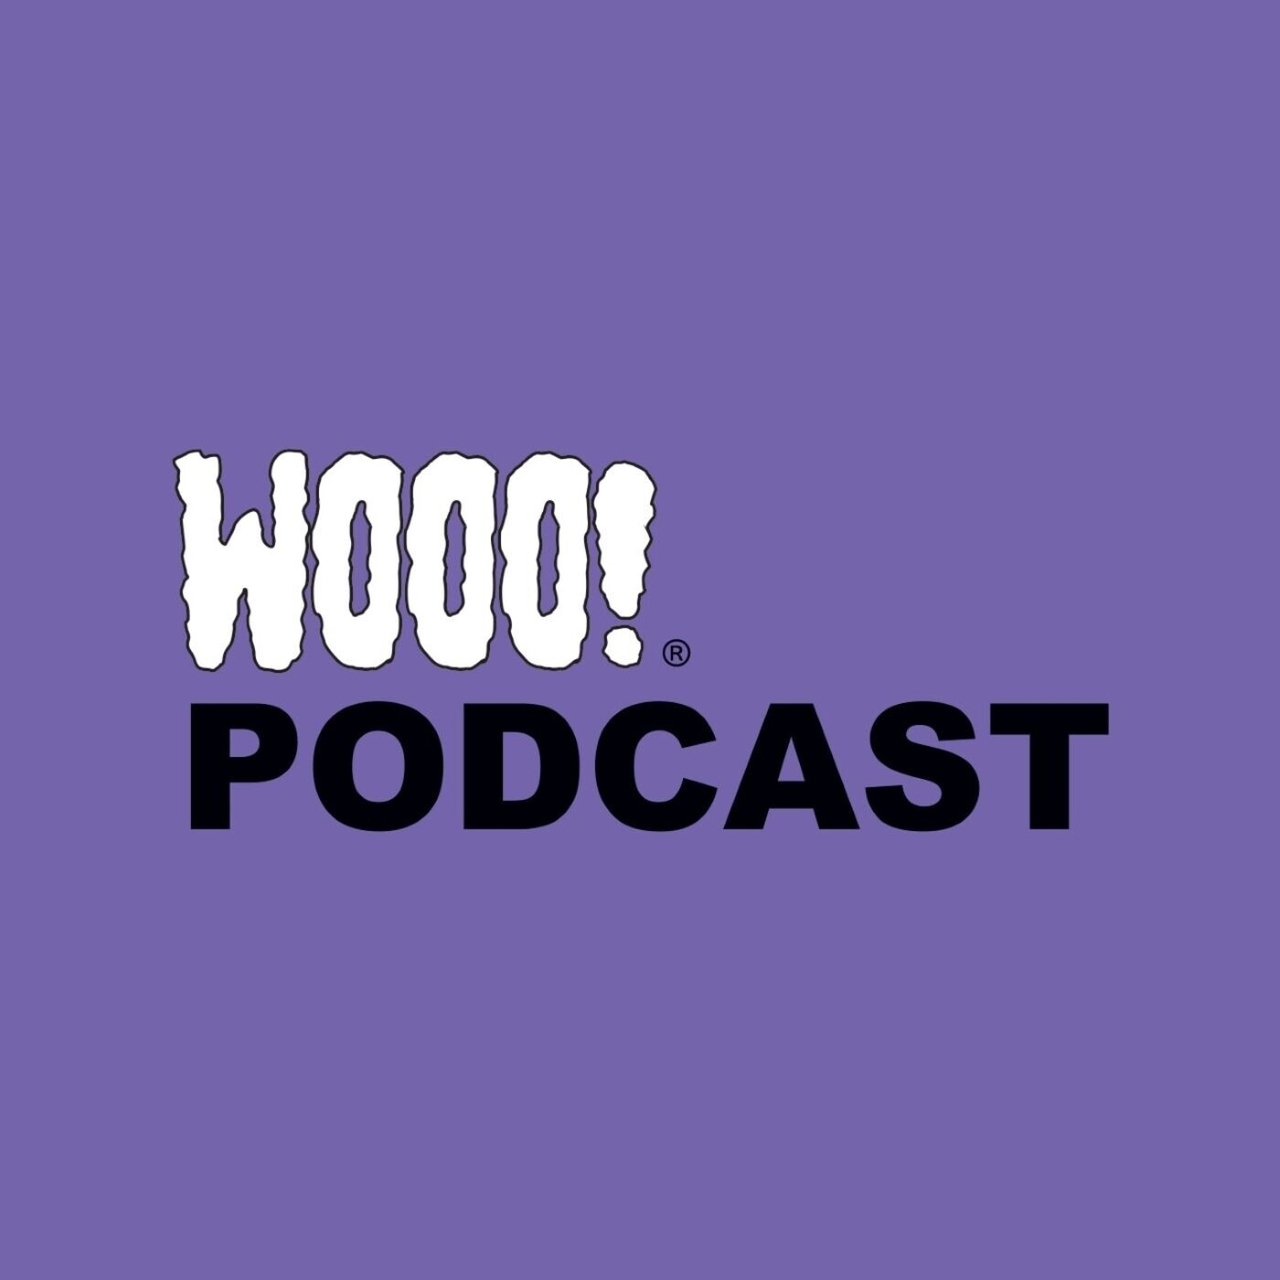 Wooo-Podcast